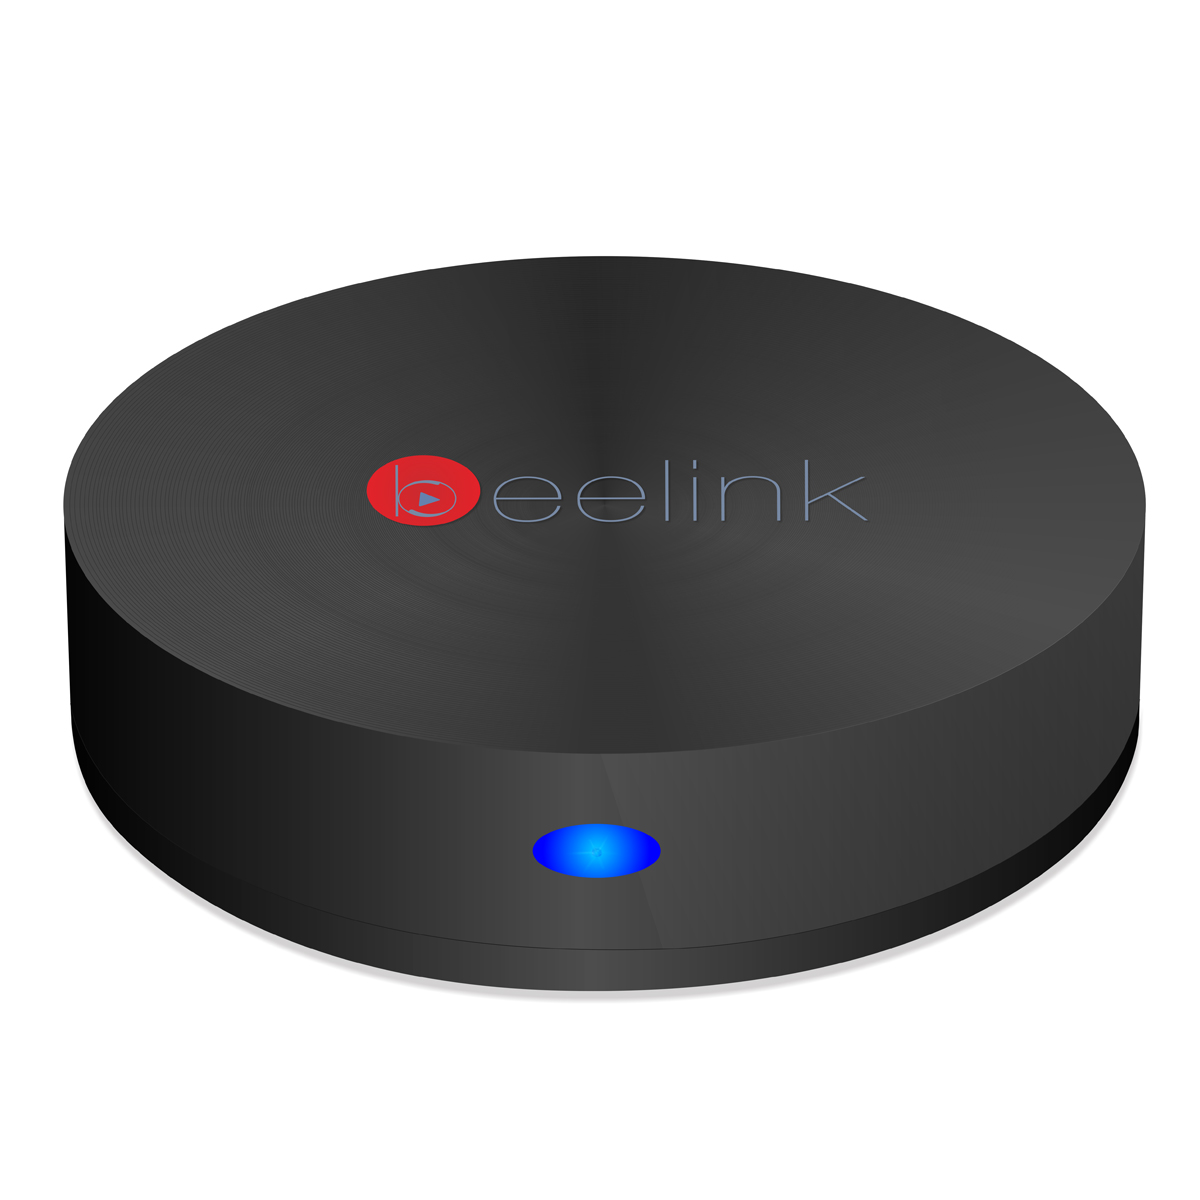 Beelink S82 Plus Smart 4K2K Media Player Box Amlogic S812 2GB RAM 16GB ROM Android 4.4 H.265 2.4G/5G AC WiFi BT4.0 - Black